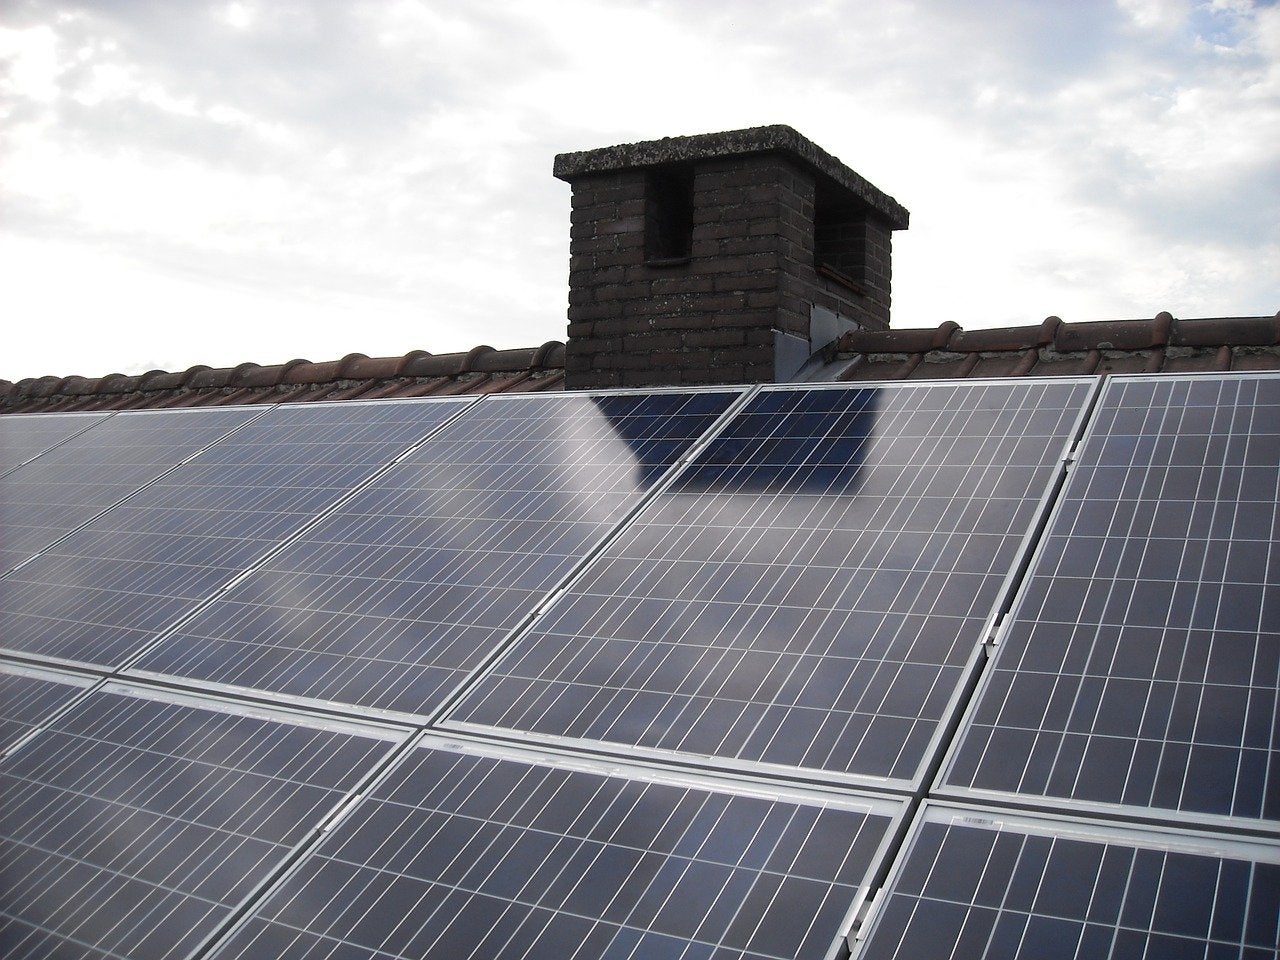 Barberton Solar PV Park, South Africa